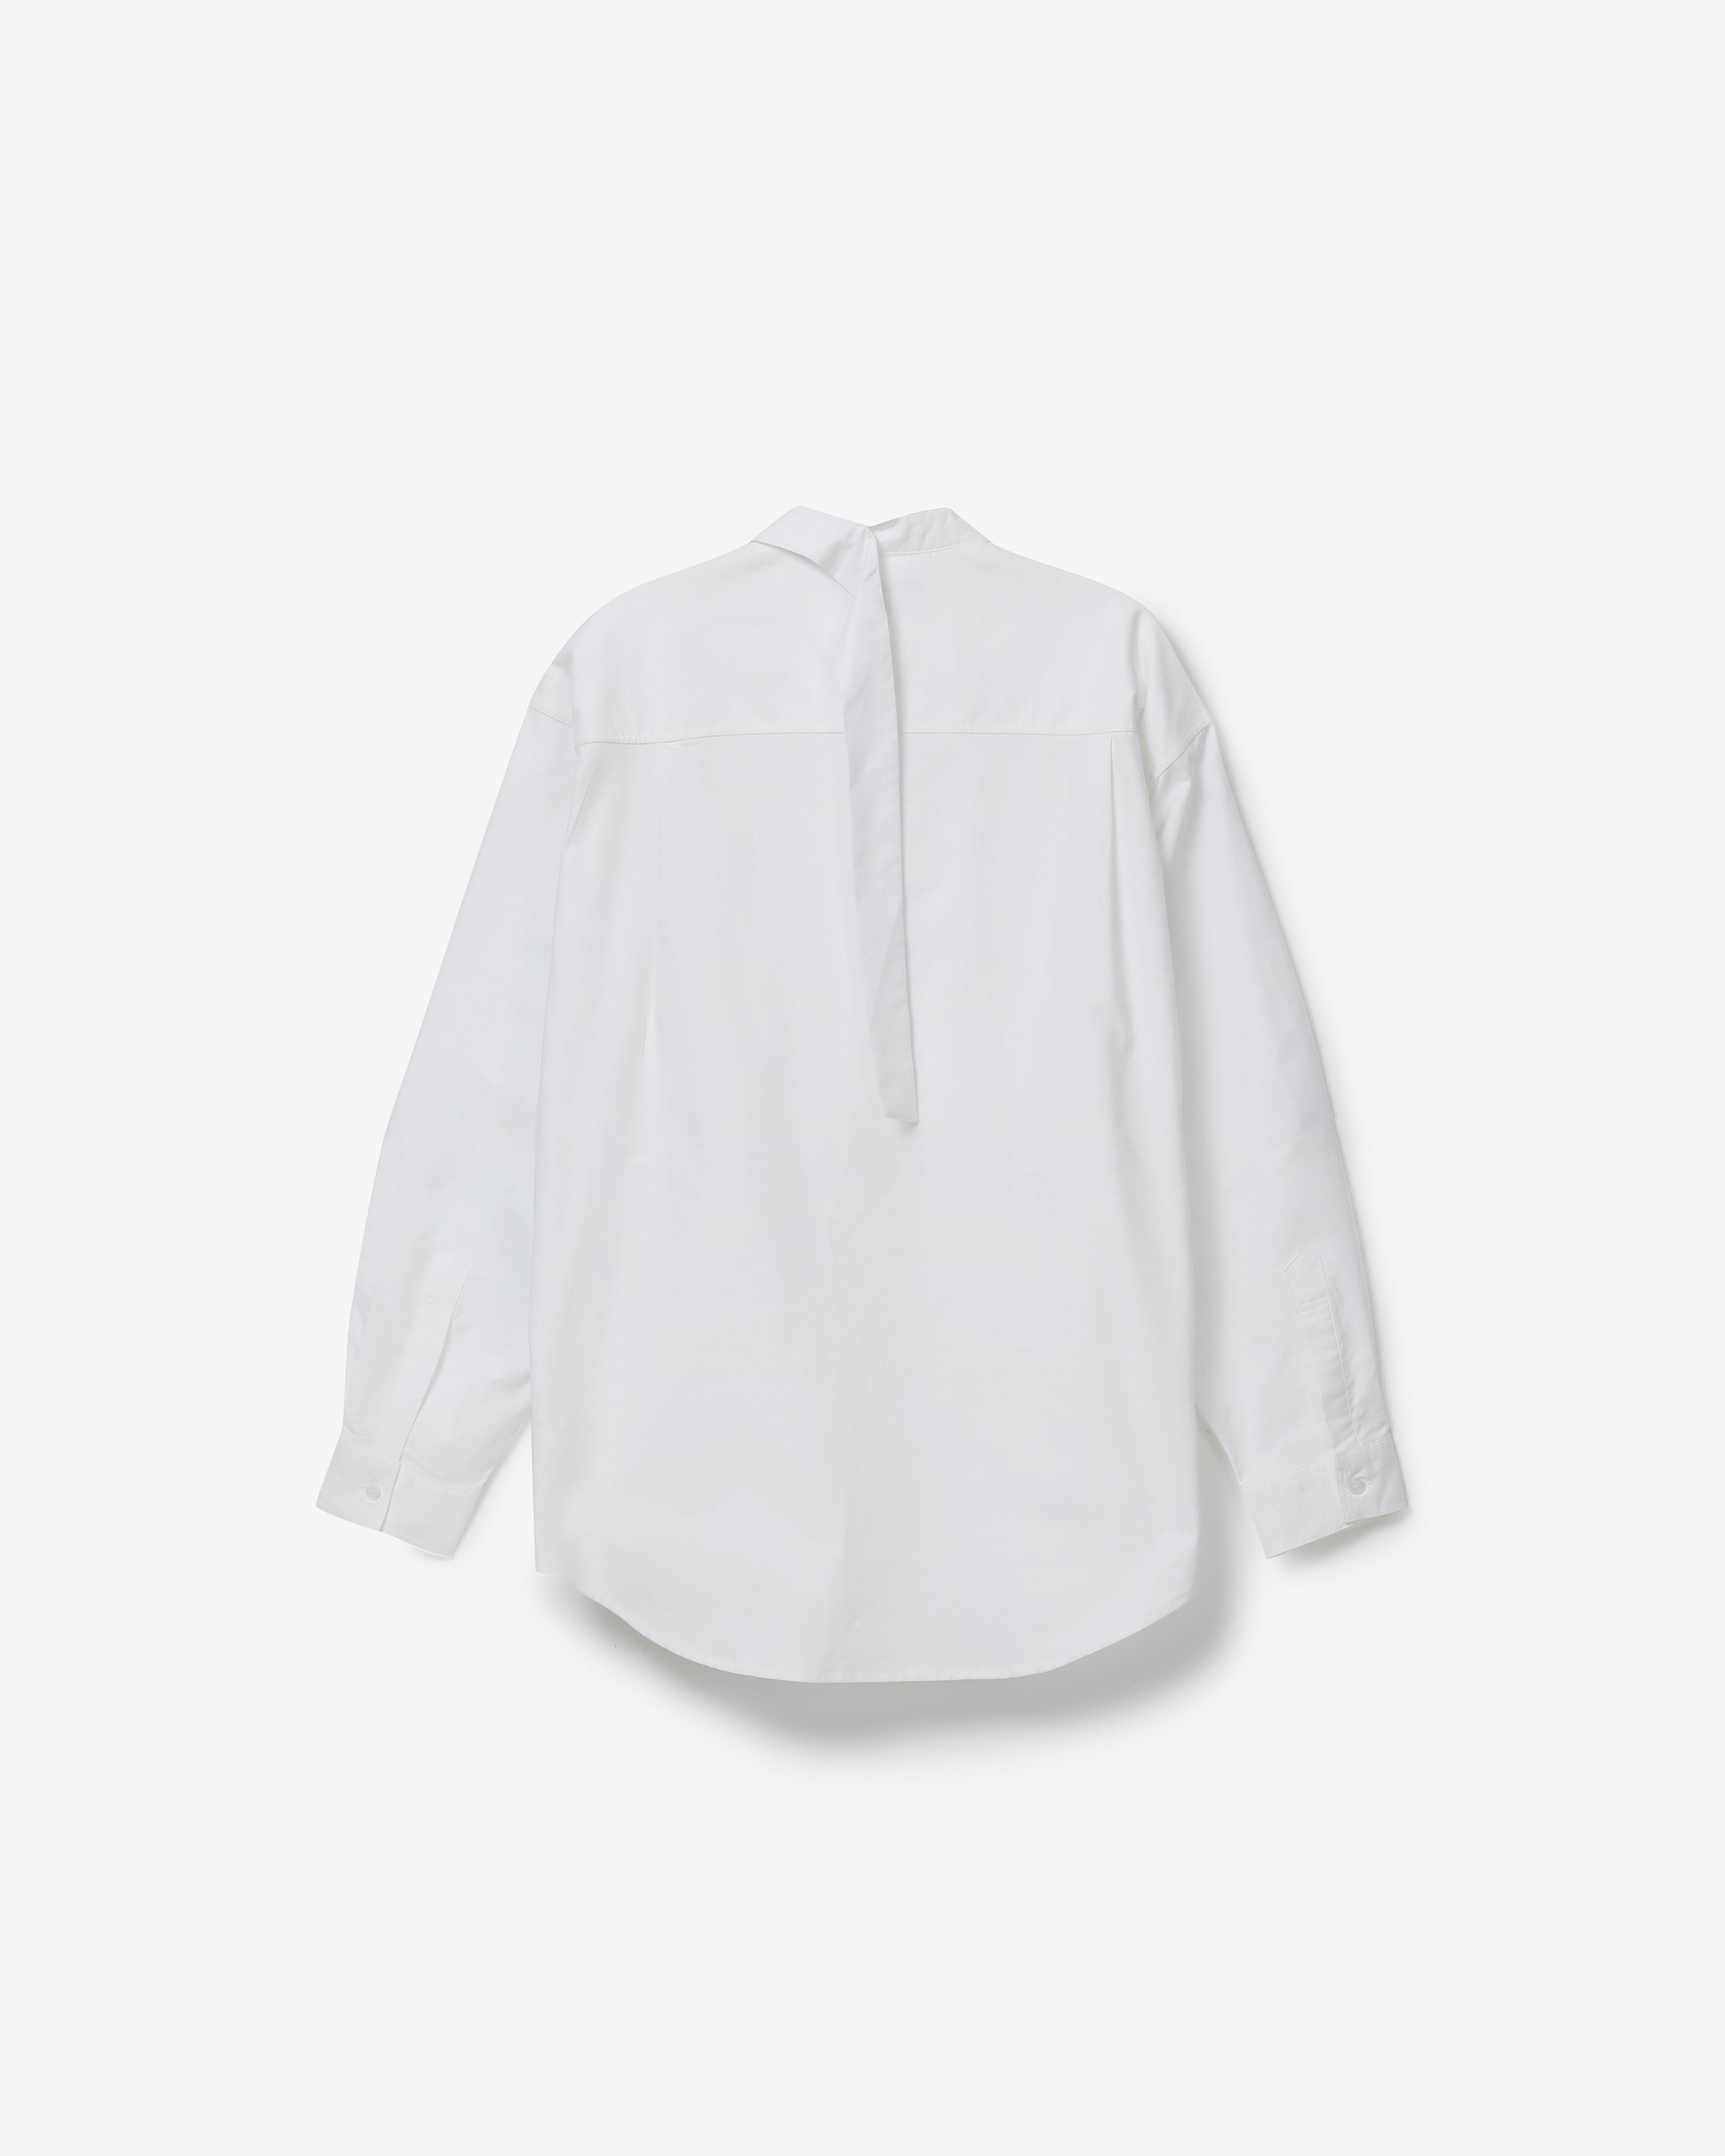 Oxpord drop tie shirts [ white ]